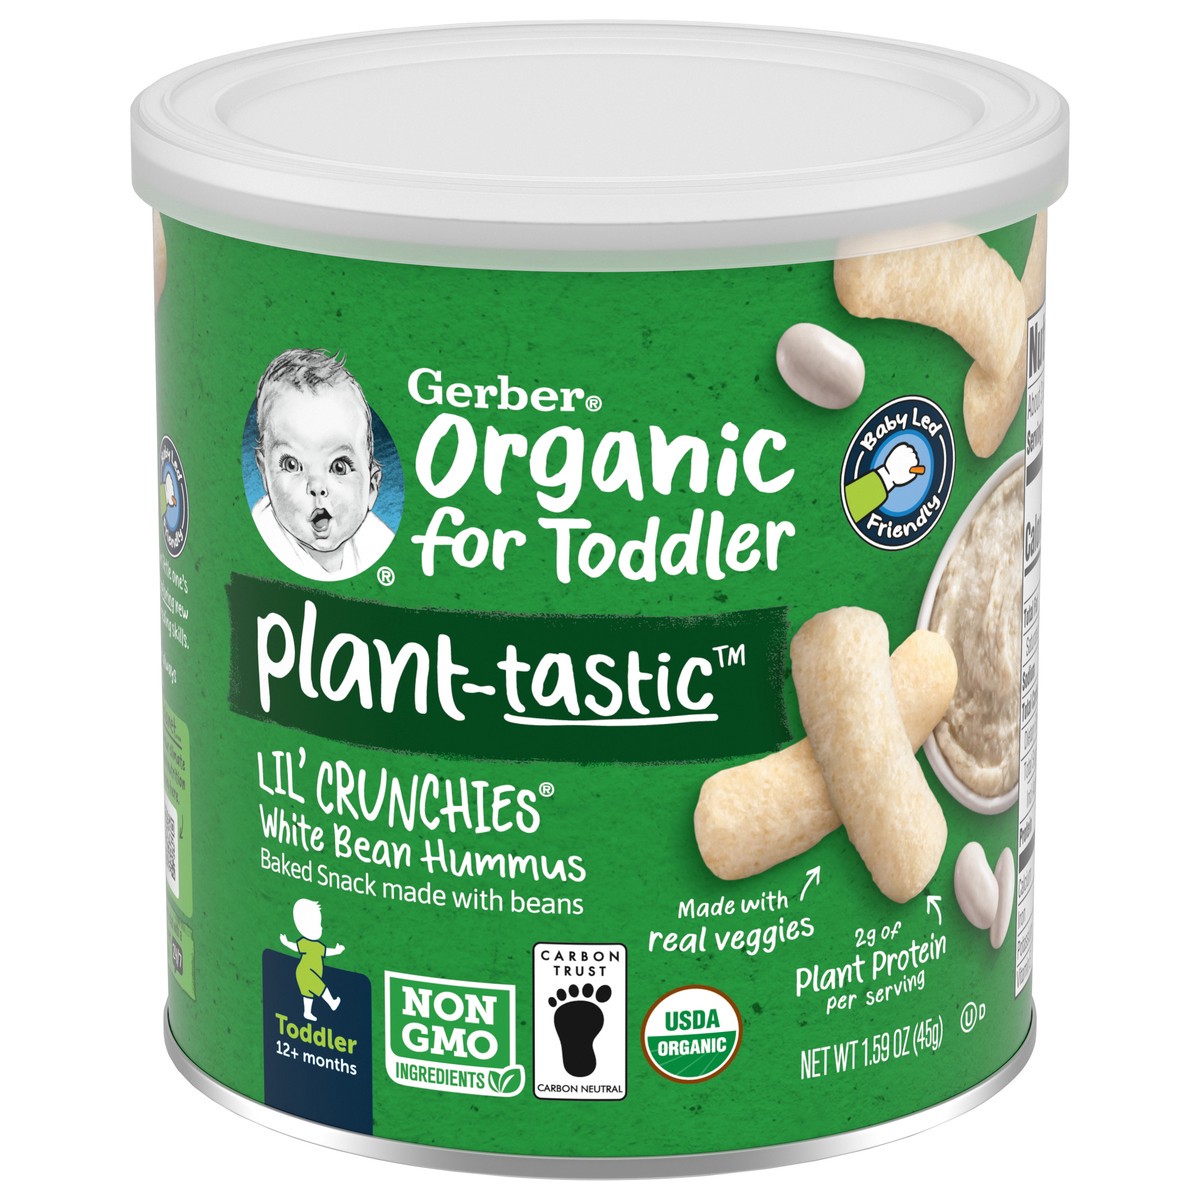 slide 1 of 8, Gerber Organic Baby Food, Toddler, Plant-tastic, Lil Crunchies, White Bean Hummus, 1.59 oz, 1.59 oz